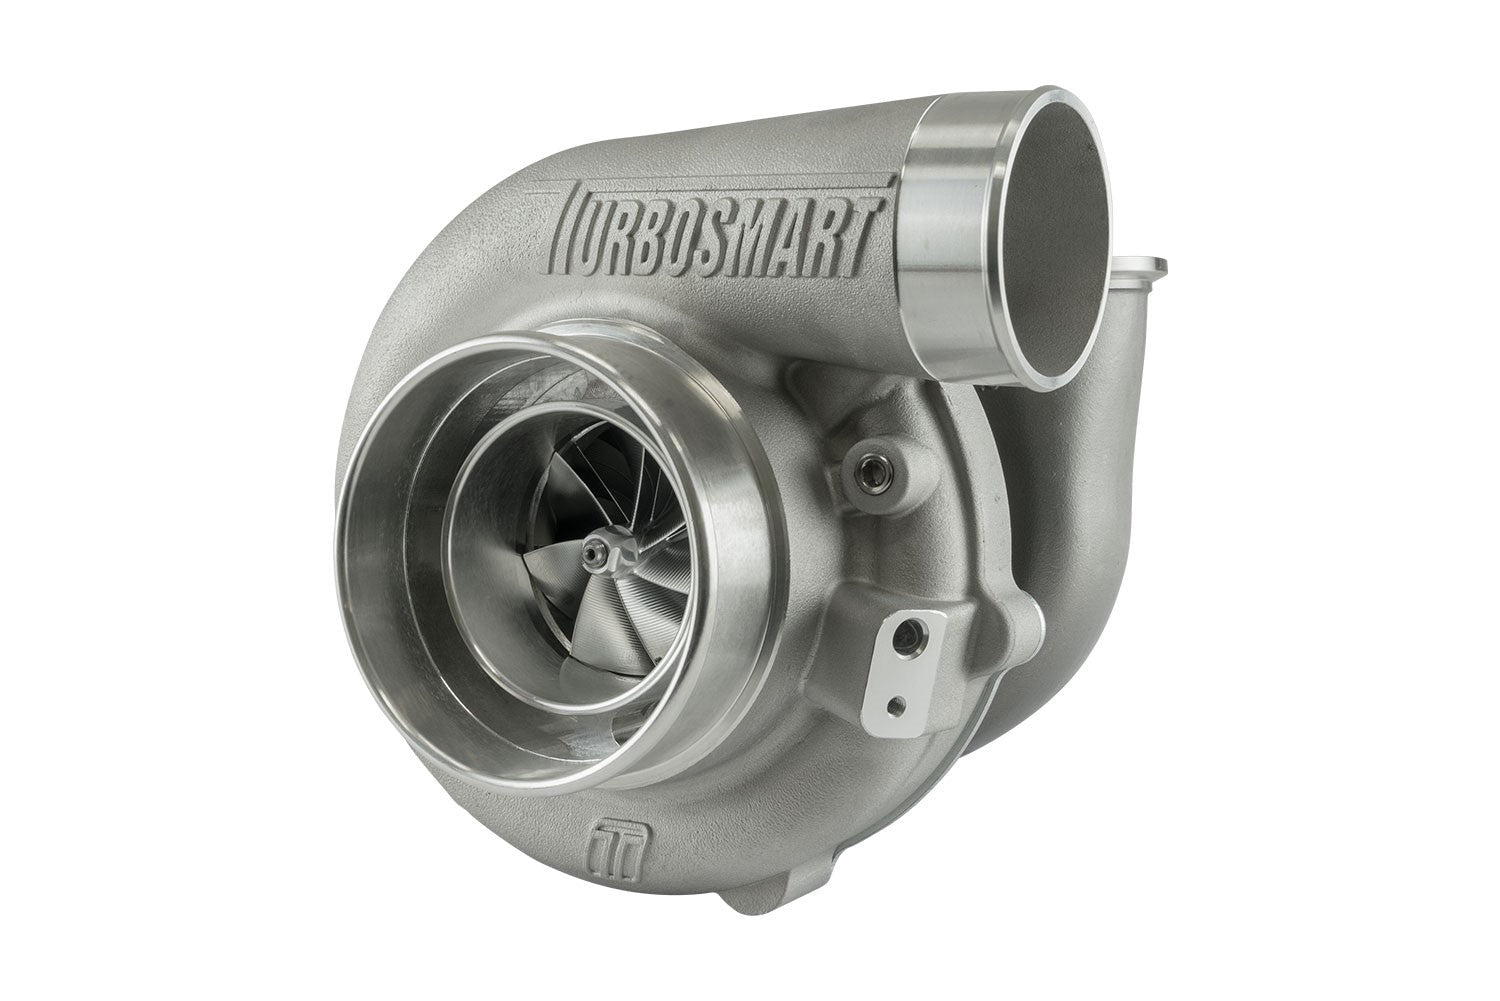 TS-1 Performance Turbocharger 6870 V-Band 0.96AR Externally Wastegated